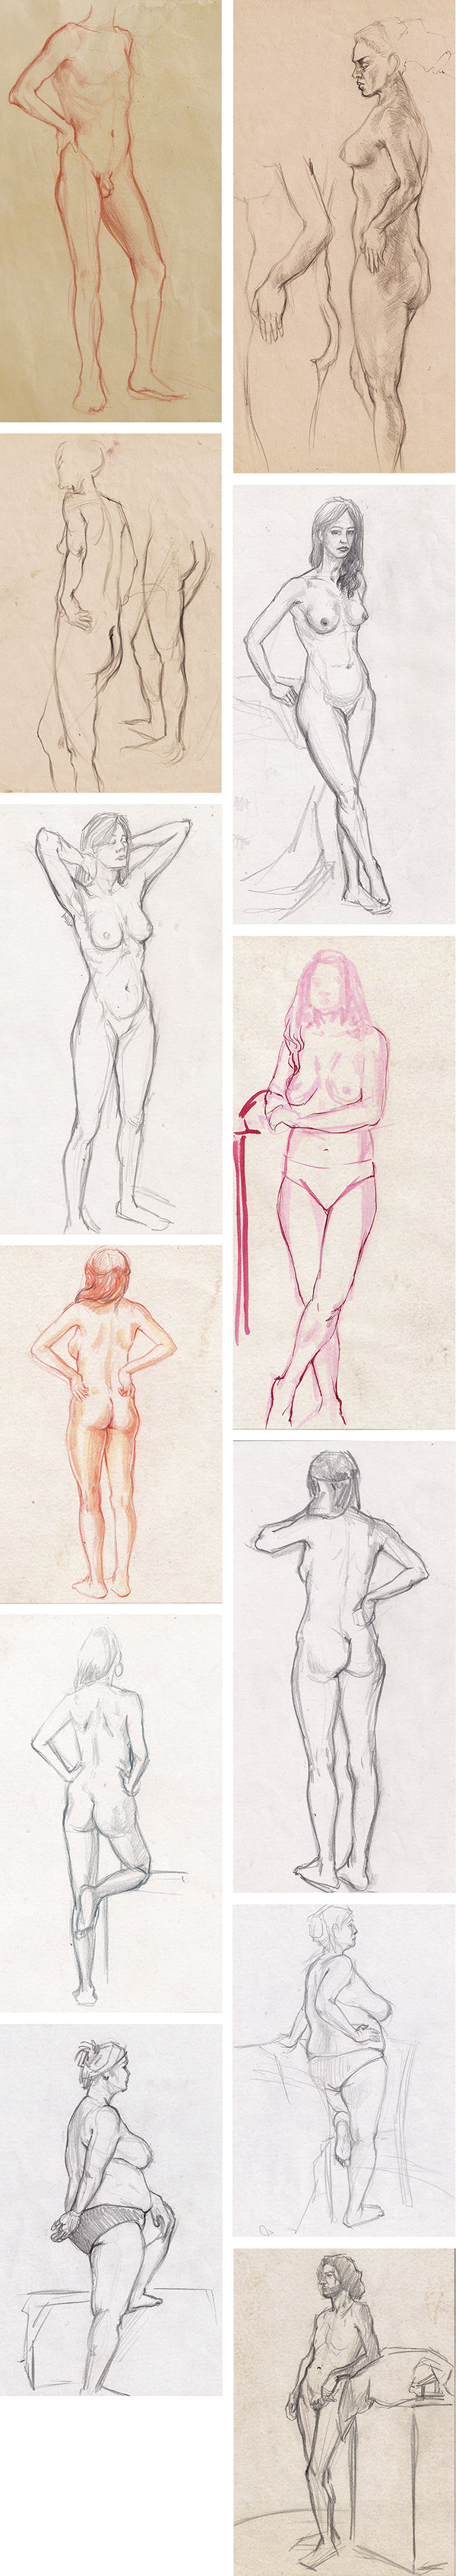 Nude sketches 2